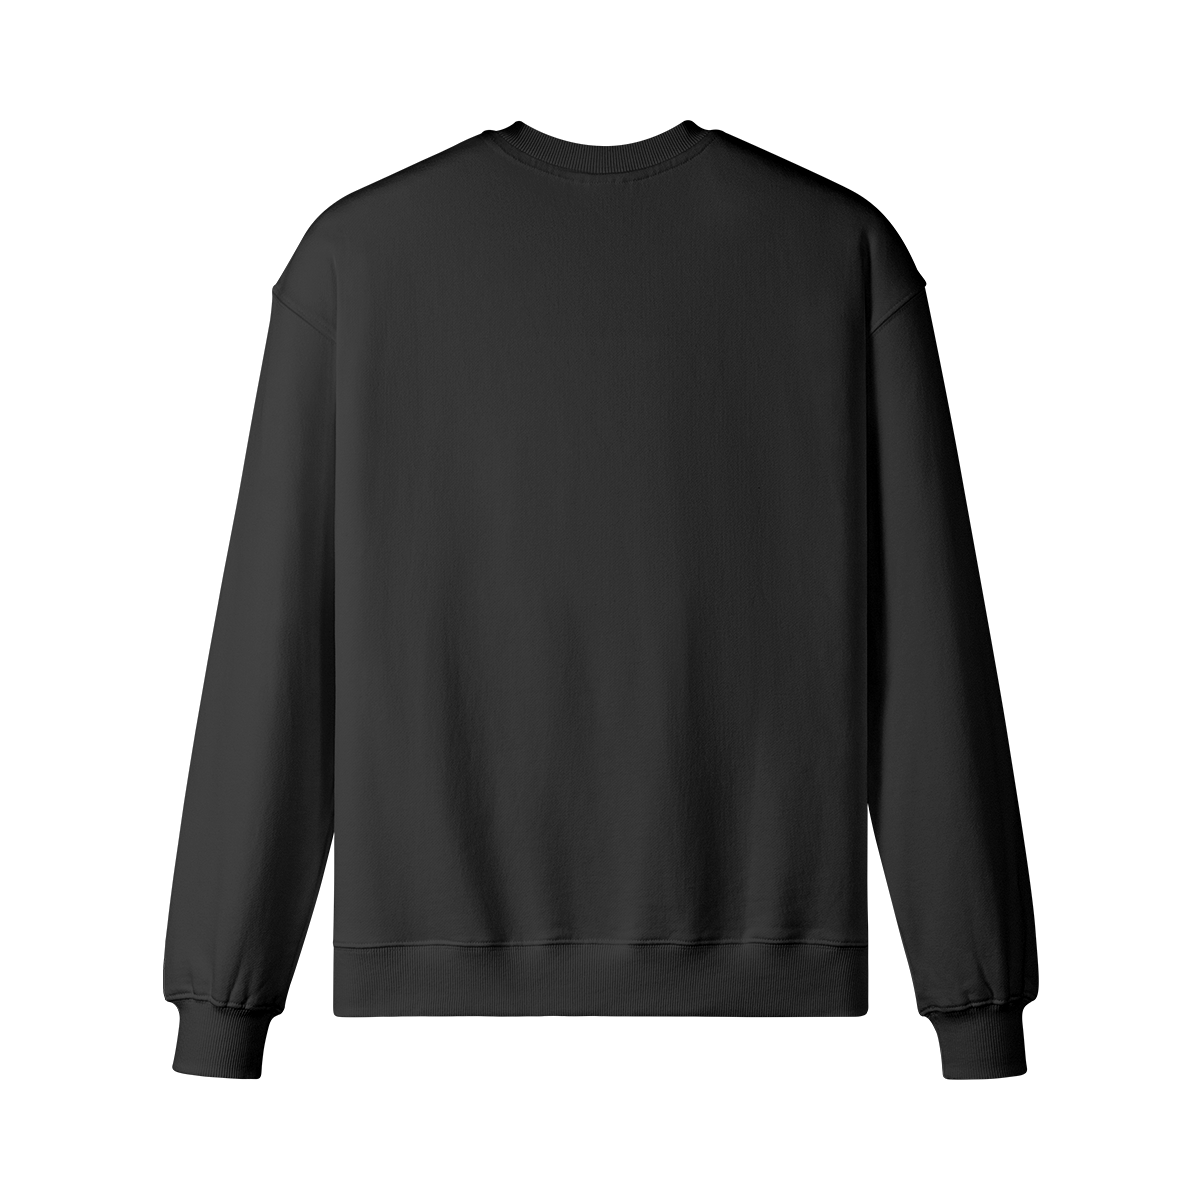 DARK FUCKING TECHNO - Unisex Oversized Sweatshirt